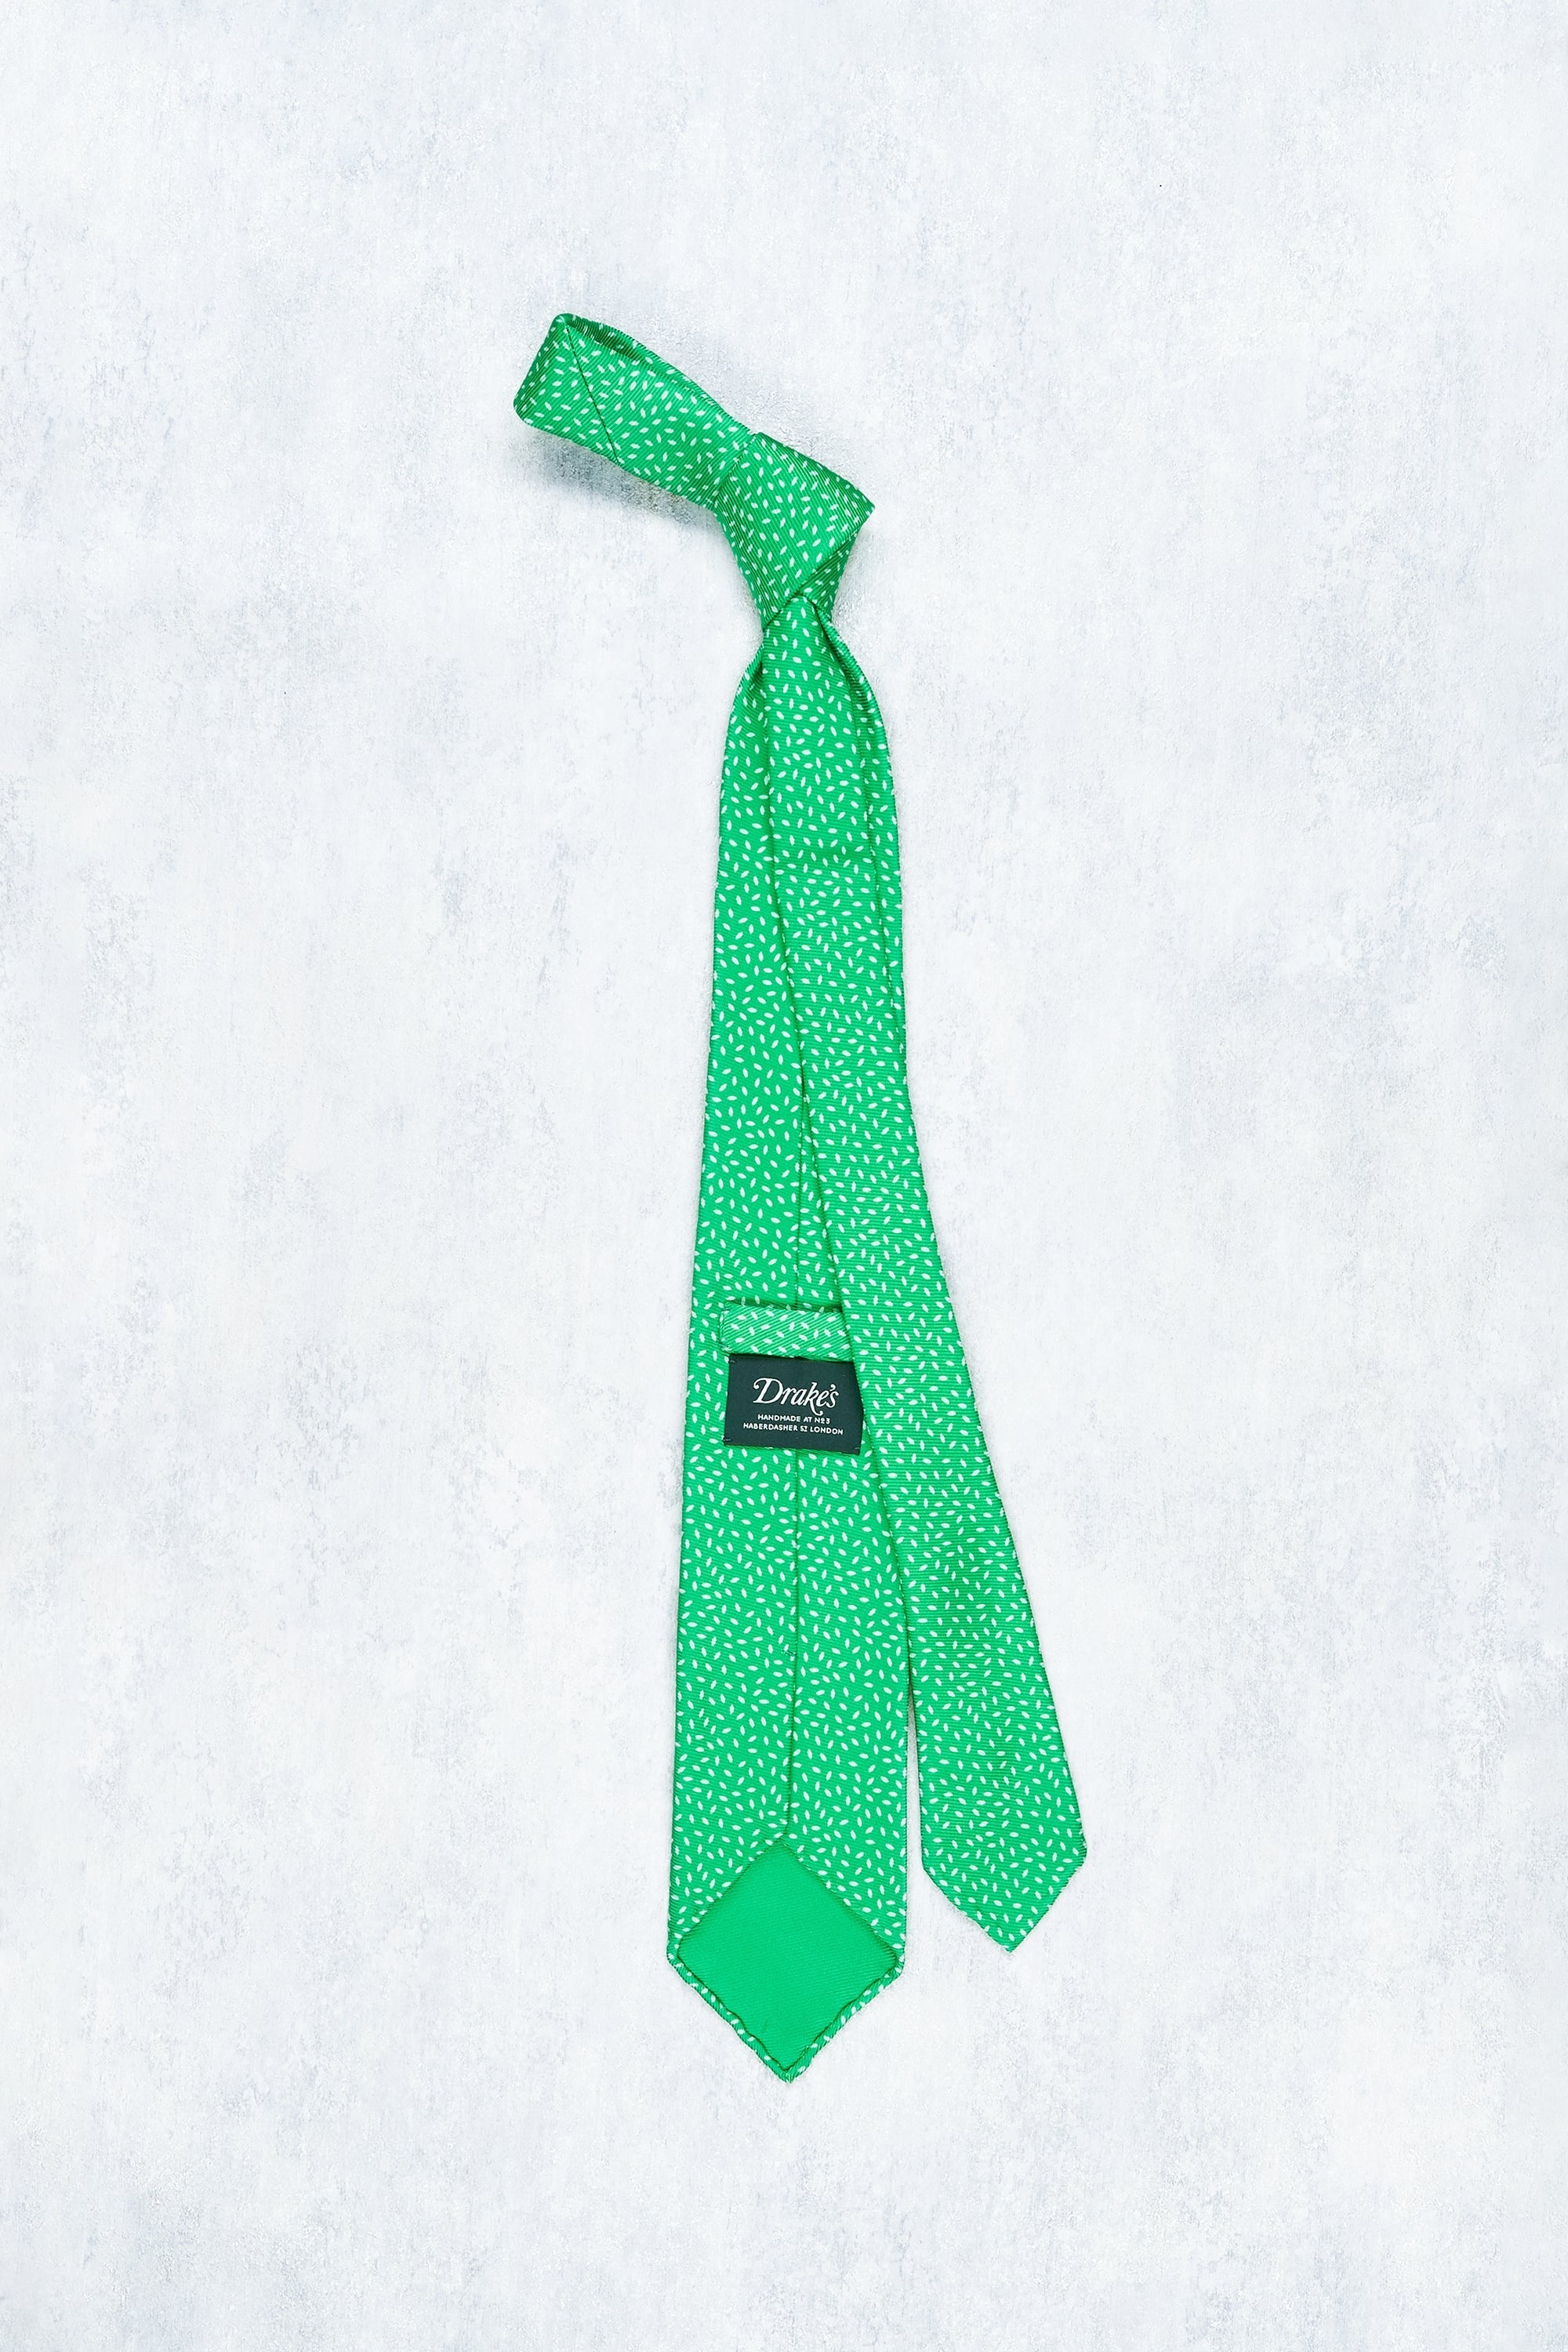 Drake's Bright Green with White Print Silk Tie